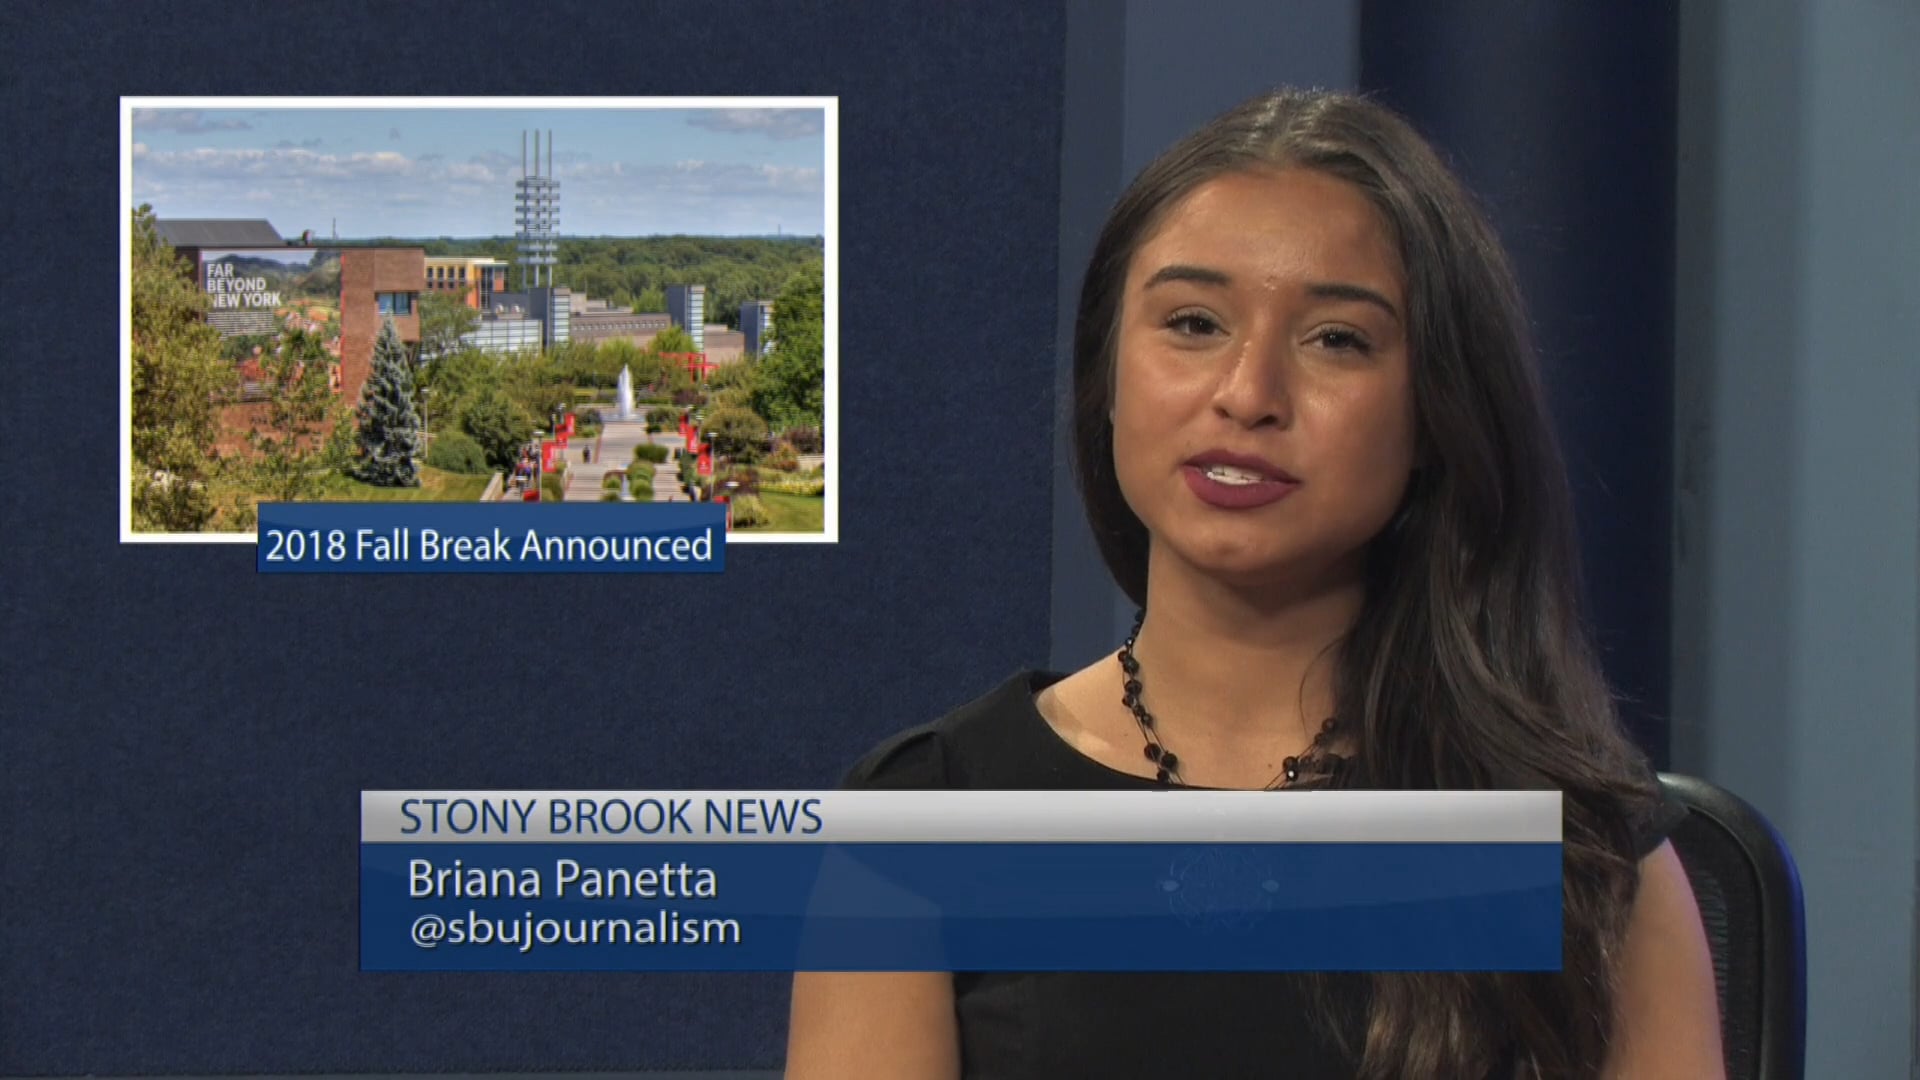 Stony Brook News: Fall Break Announced